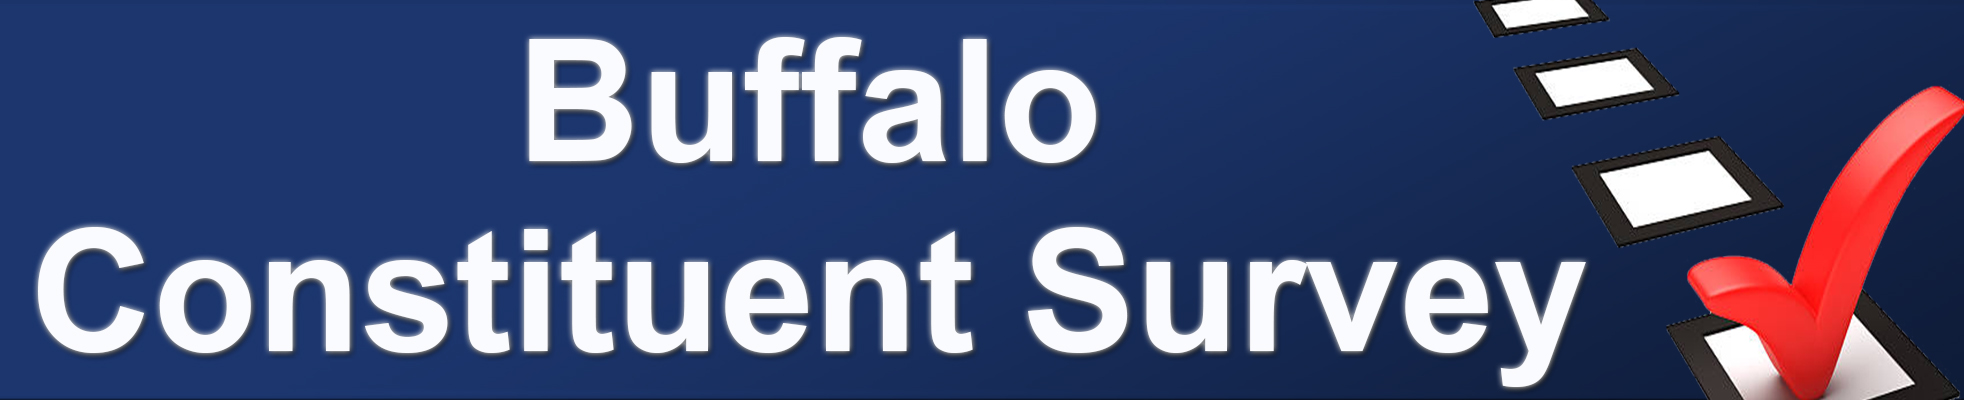 2021 Constituent Survey (Buffalo)